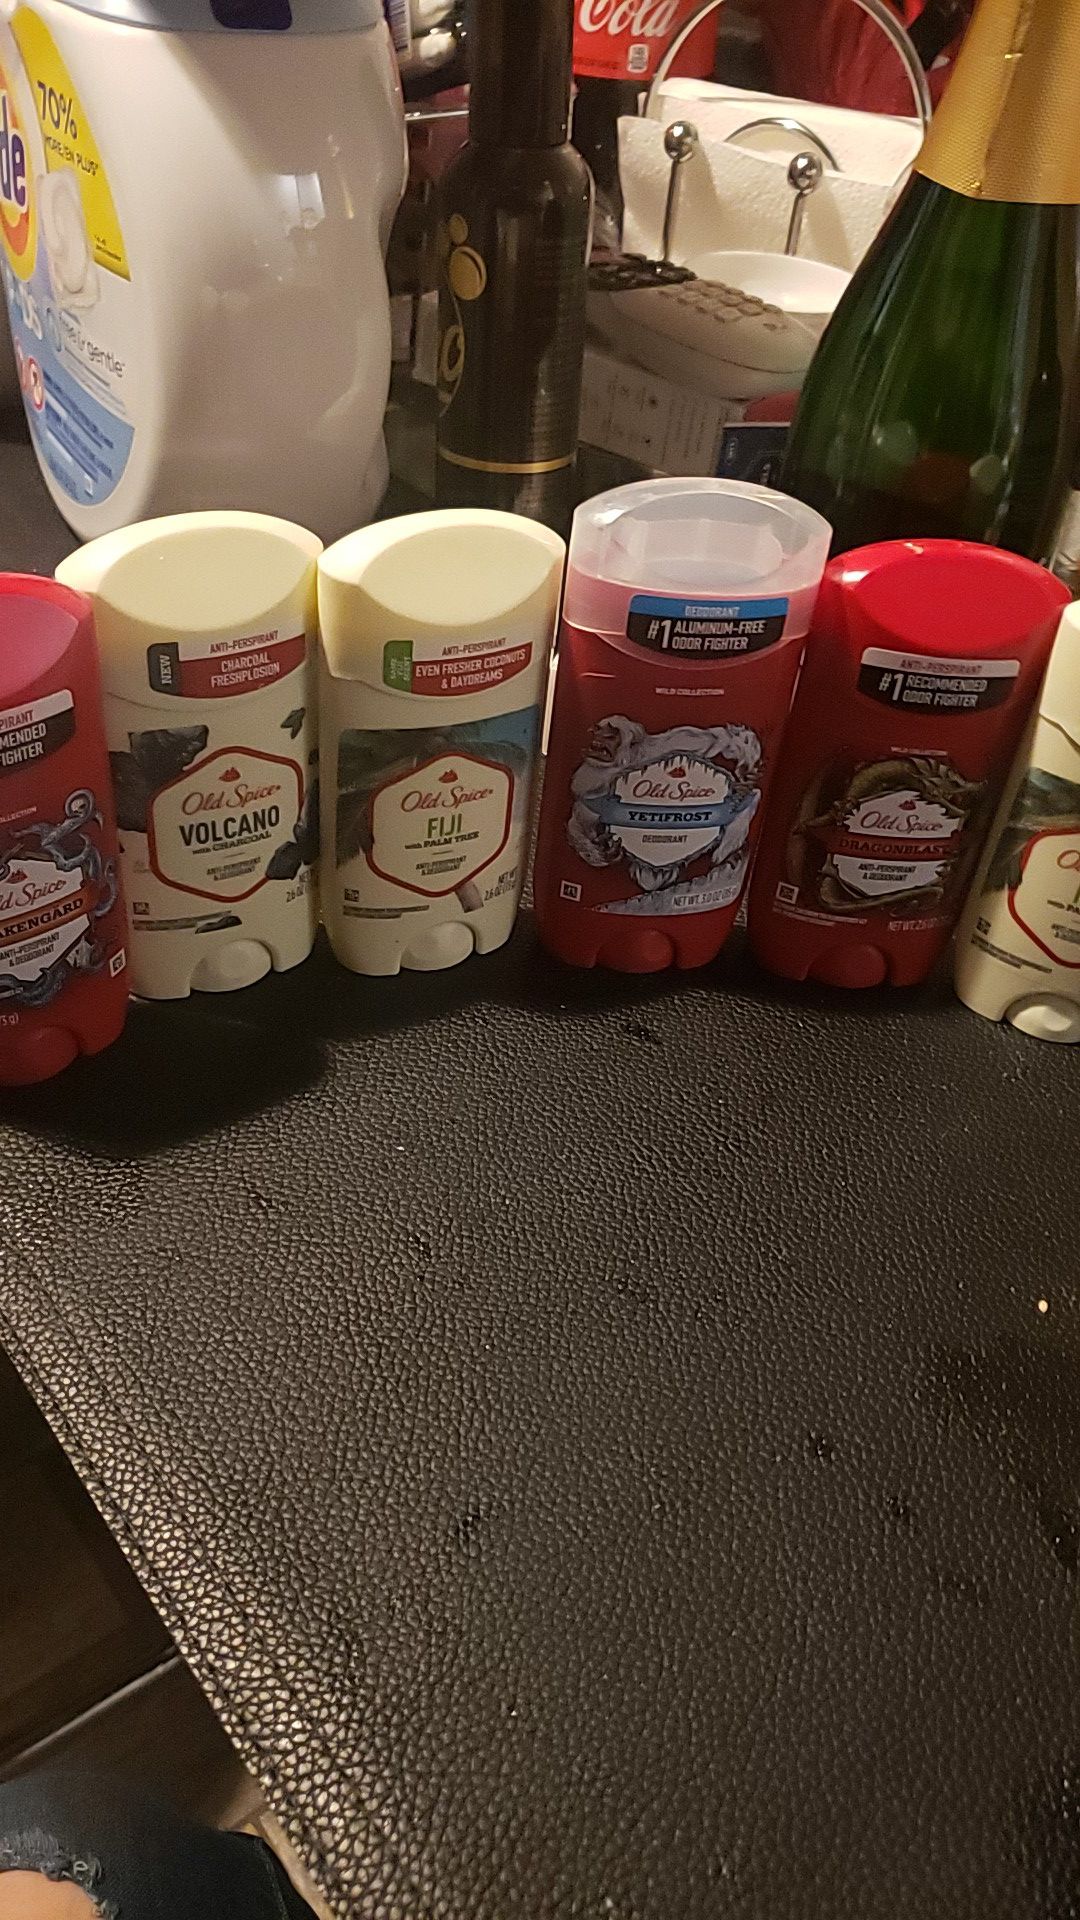 Old spice deodorants